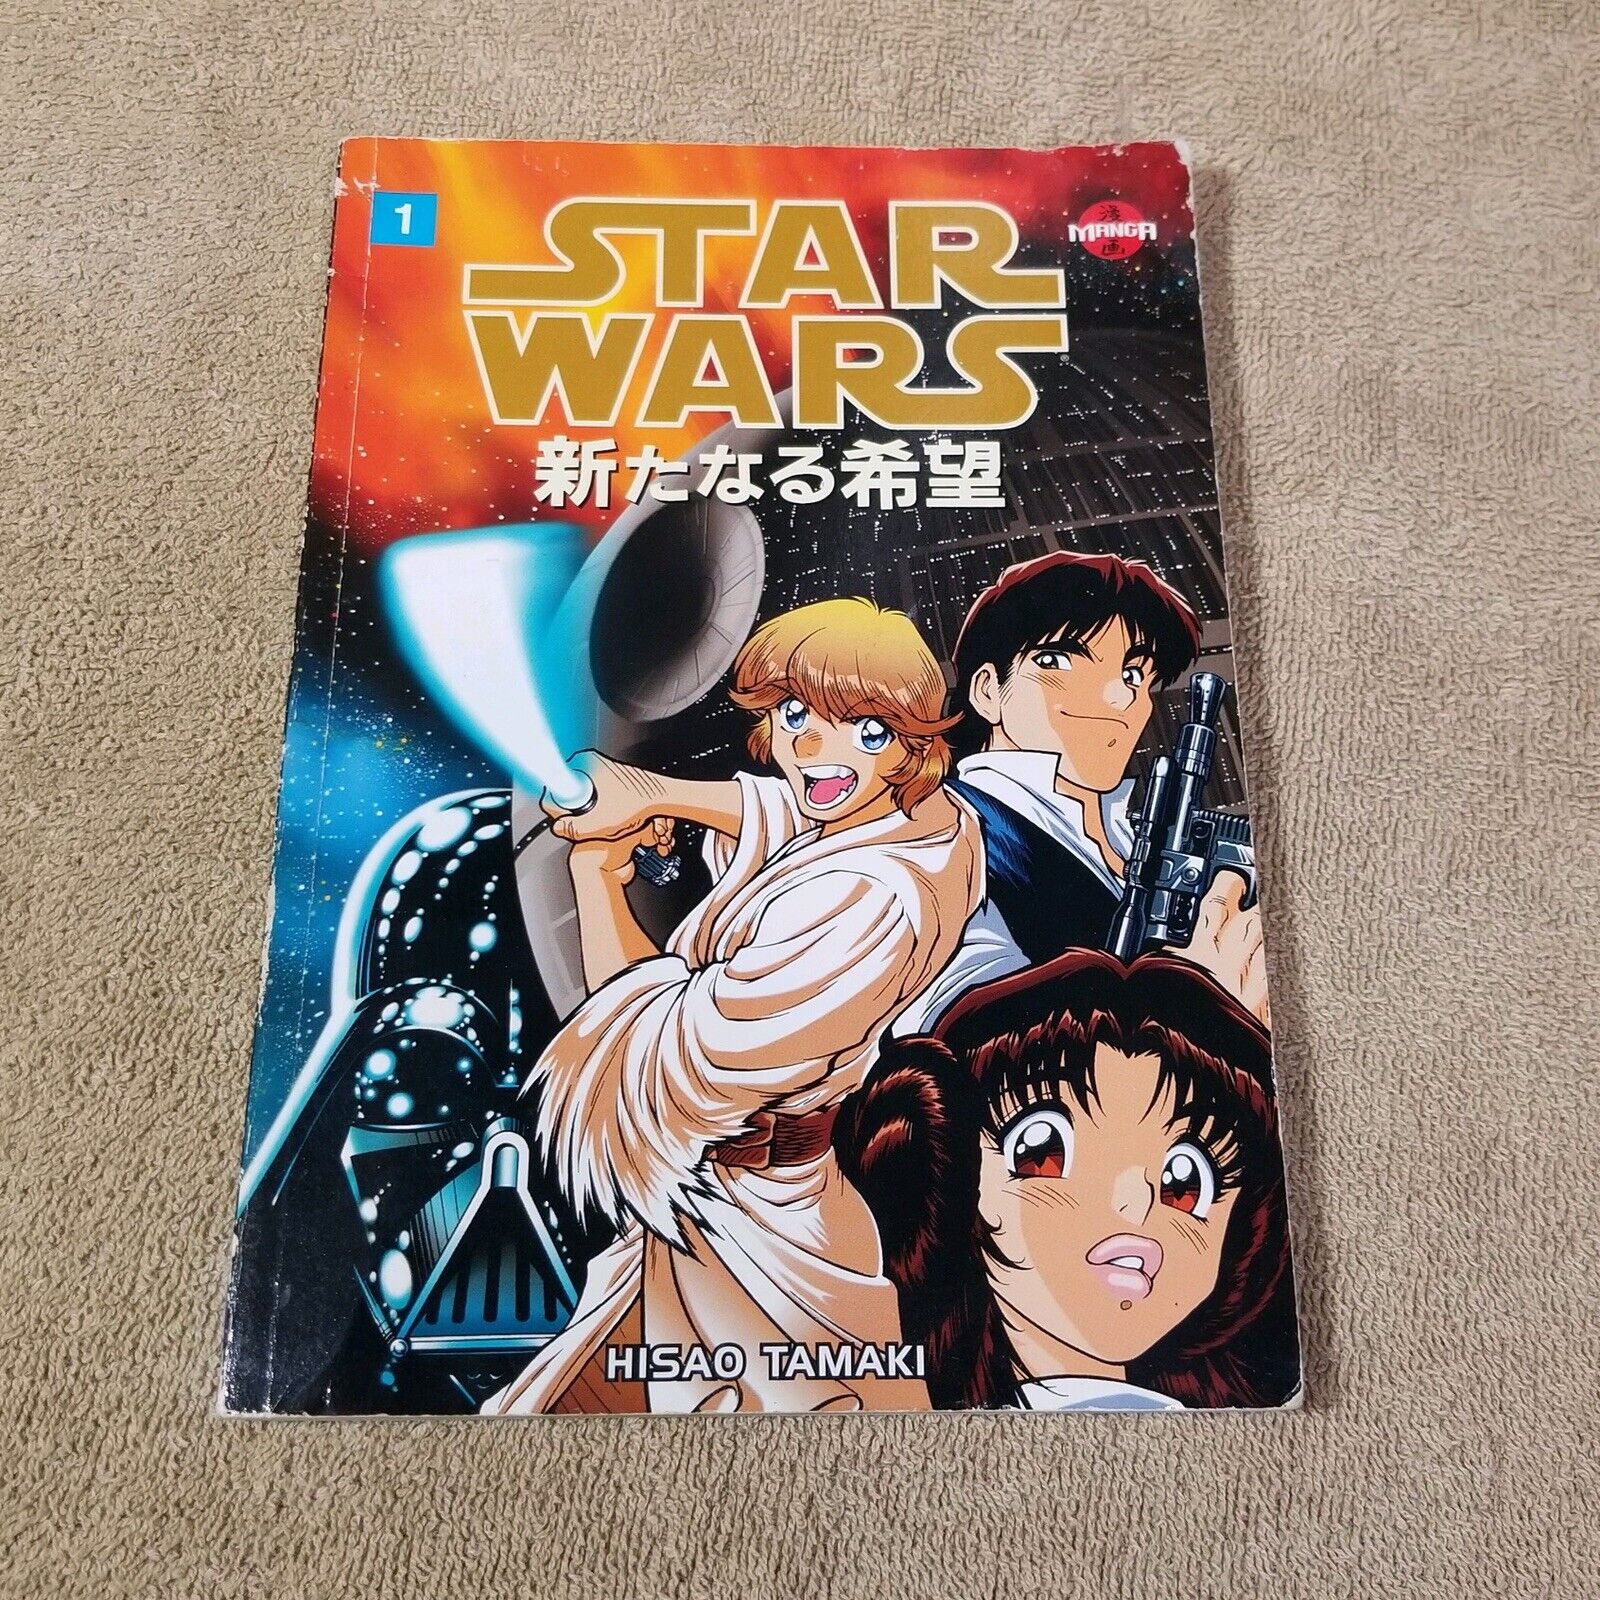 Star Wars Manga Ser.: A New Hope by George Lucas Volume 1